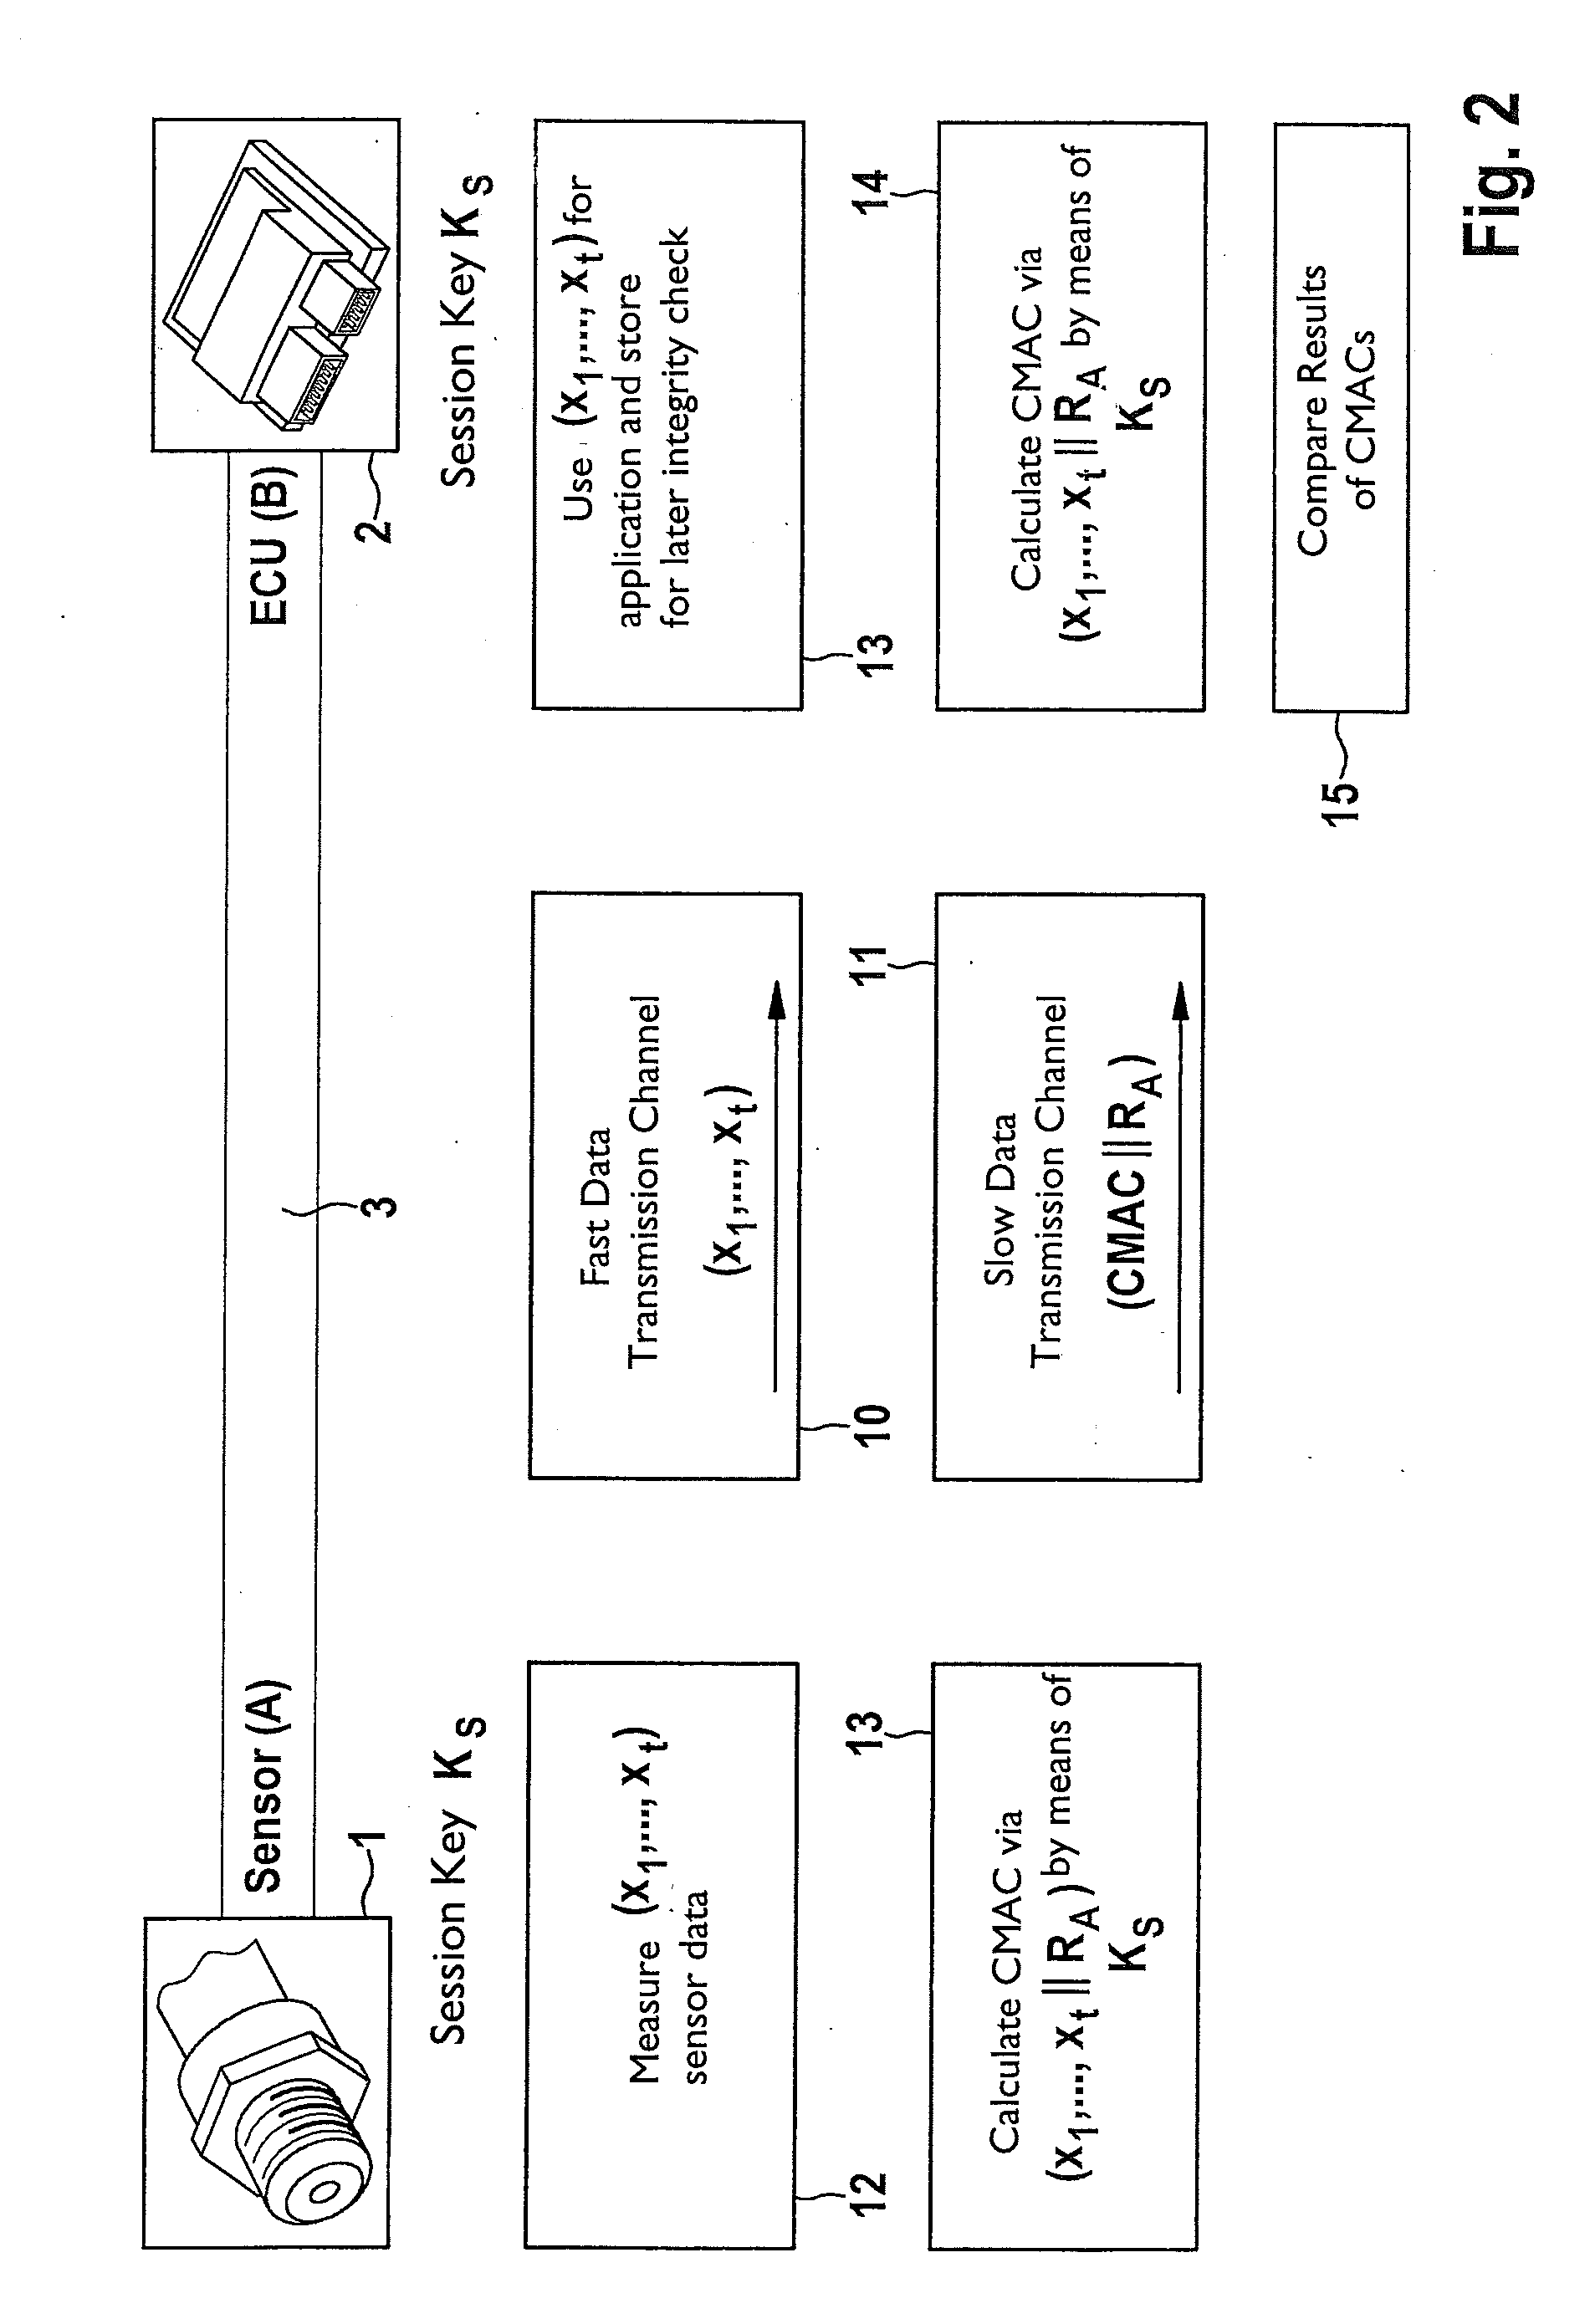 Method for recognizing a manipulation of a sensor and/or sensor data of the sensor